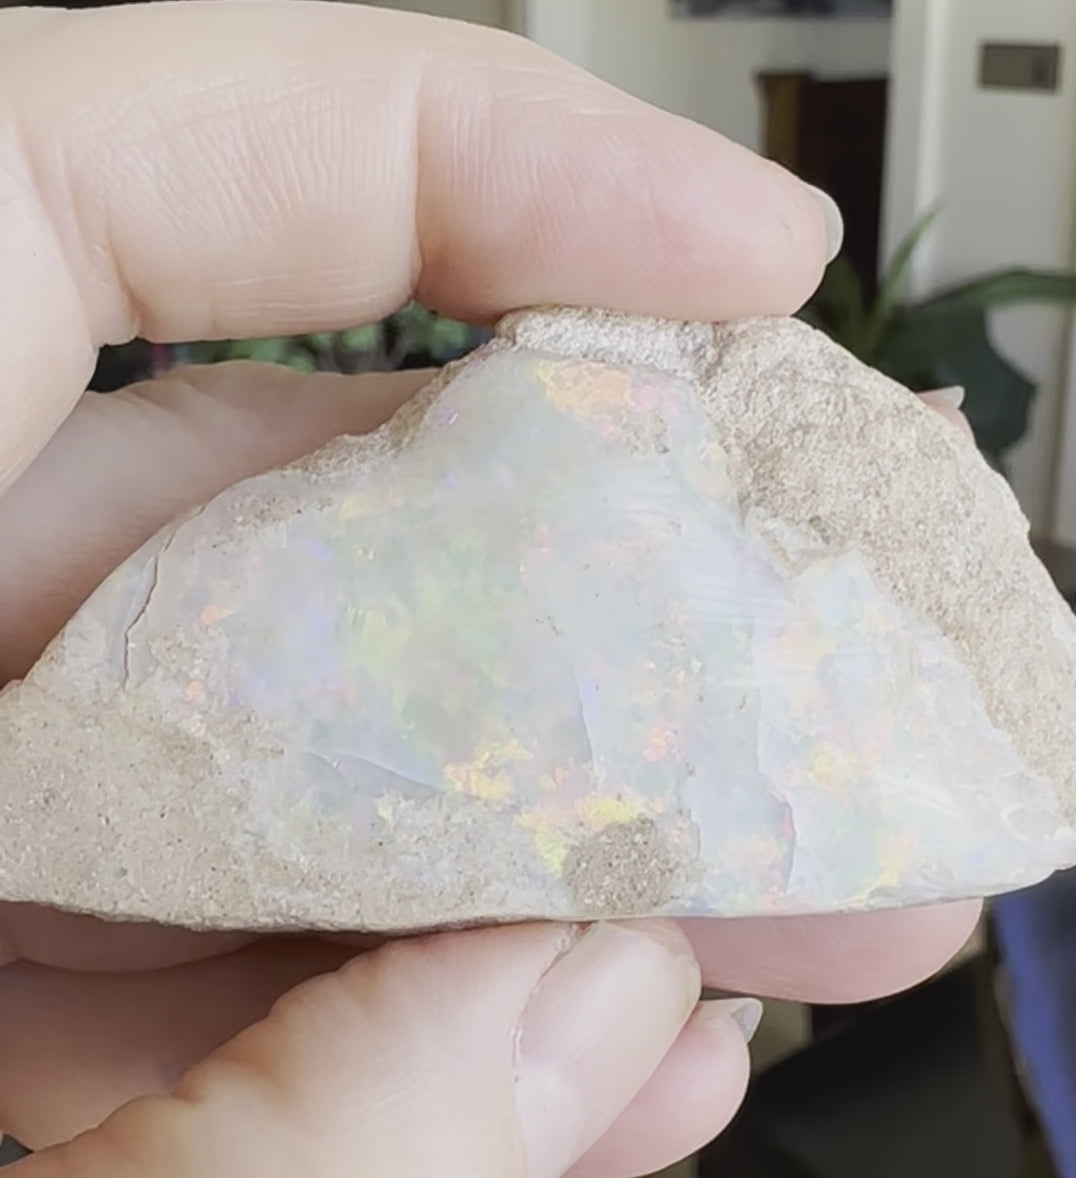 Brilliant rough opal specimen from Mintabie